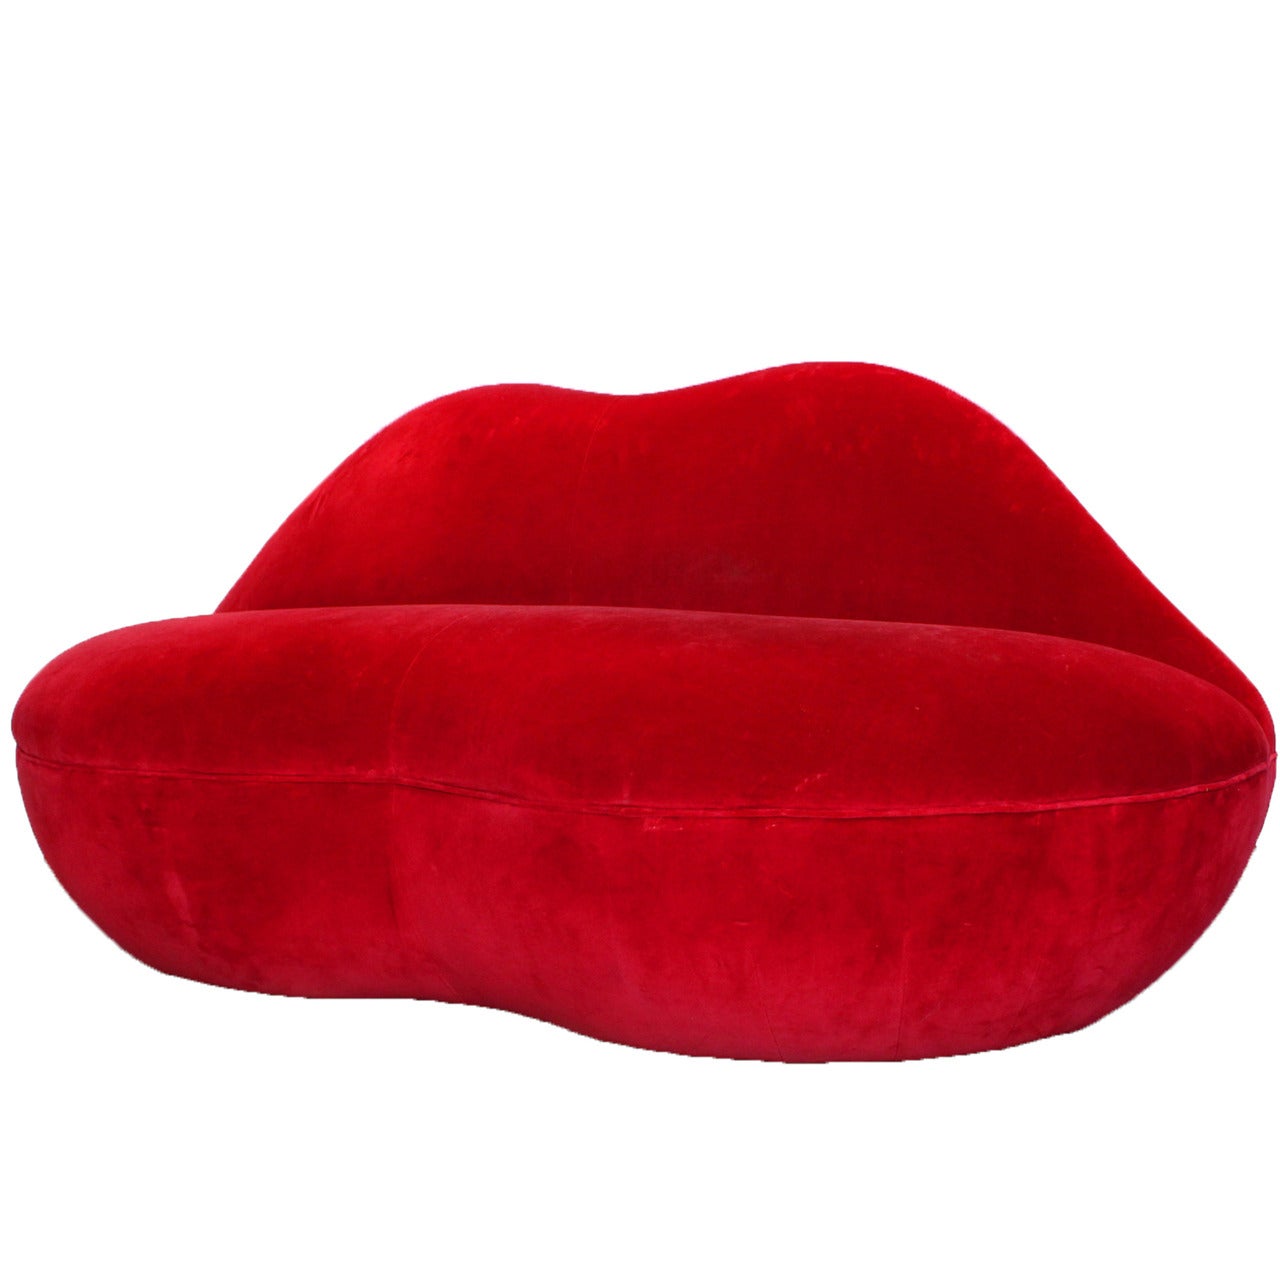 "Hot Lips" Red Sofa